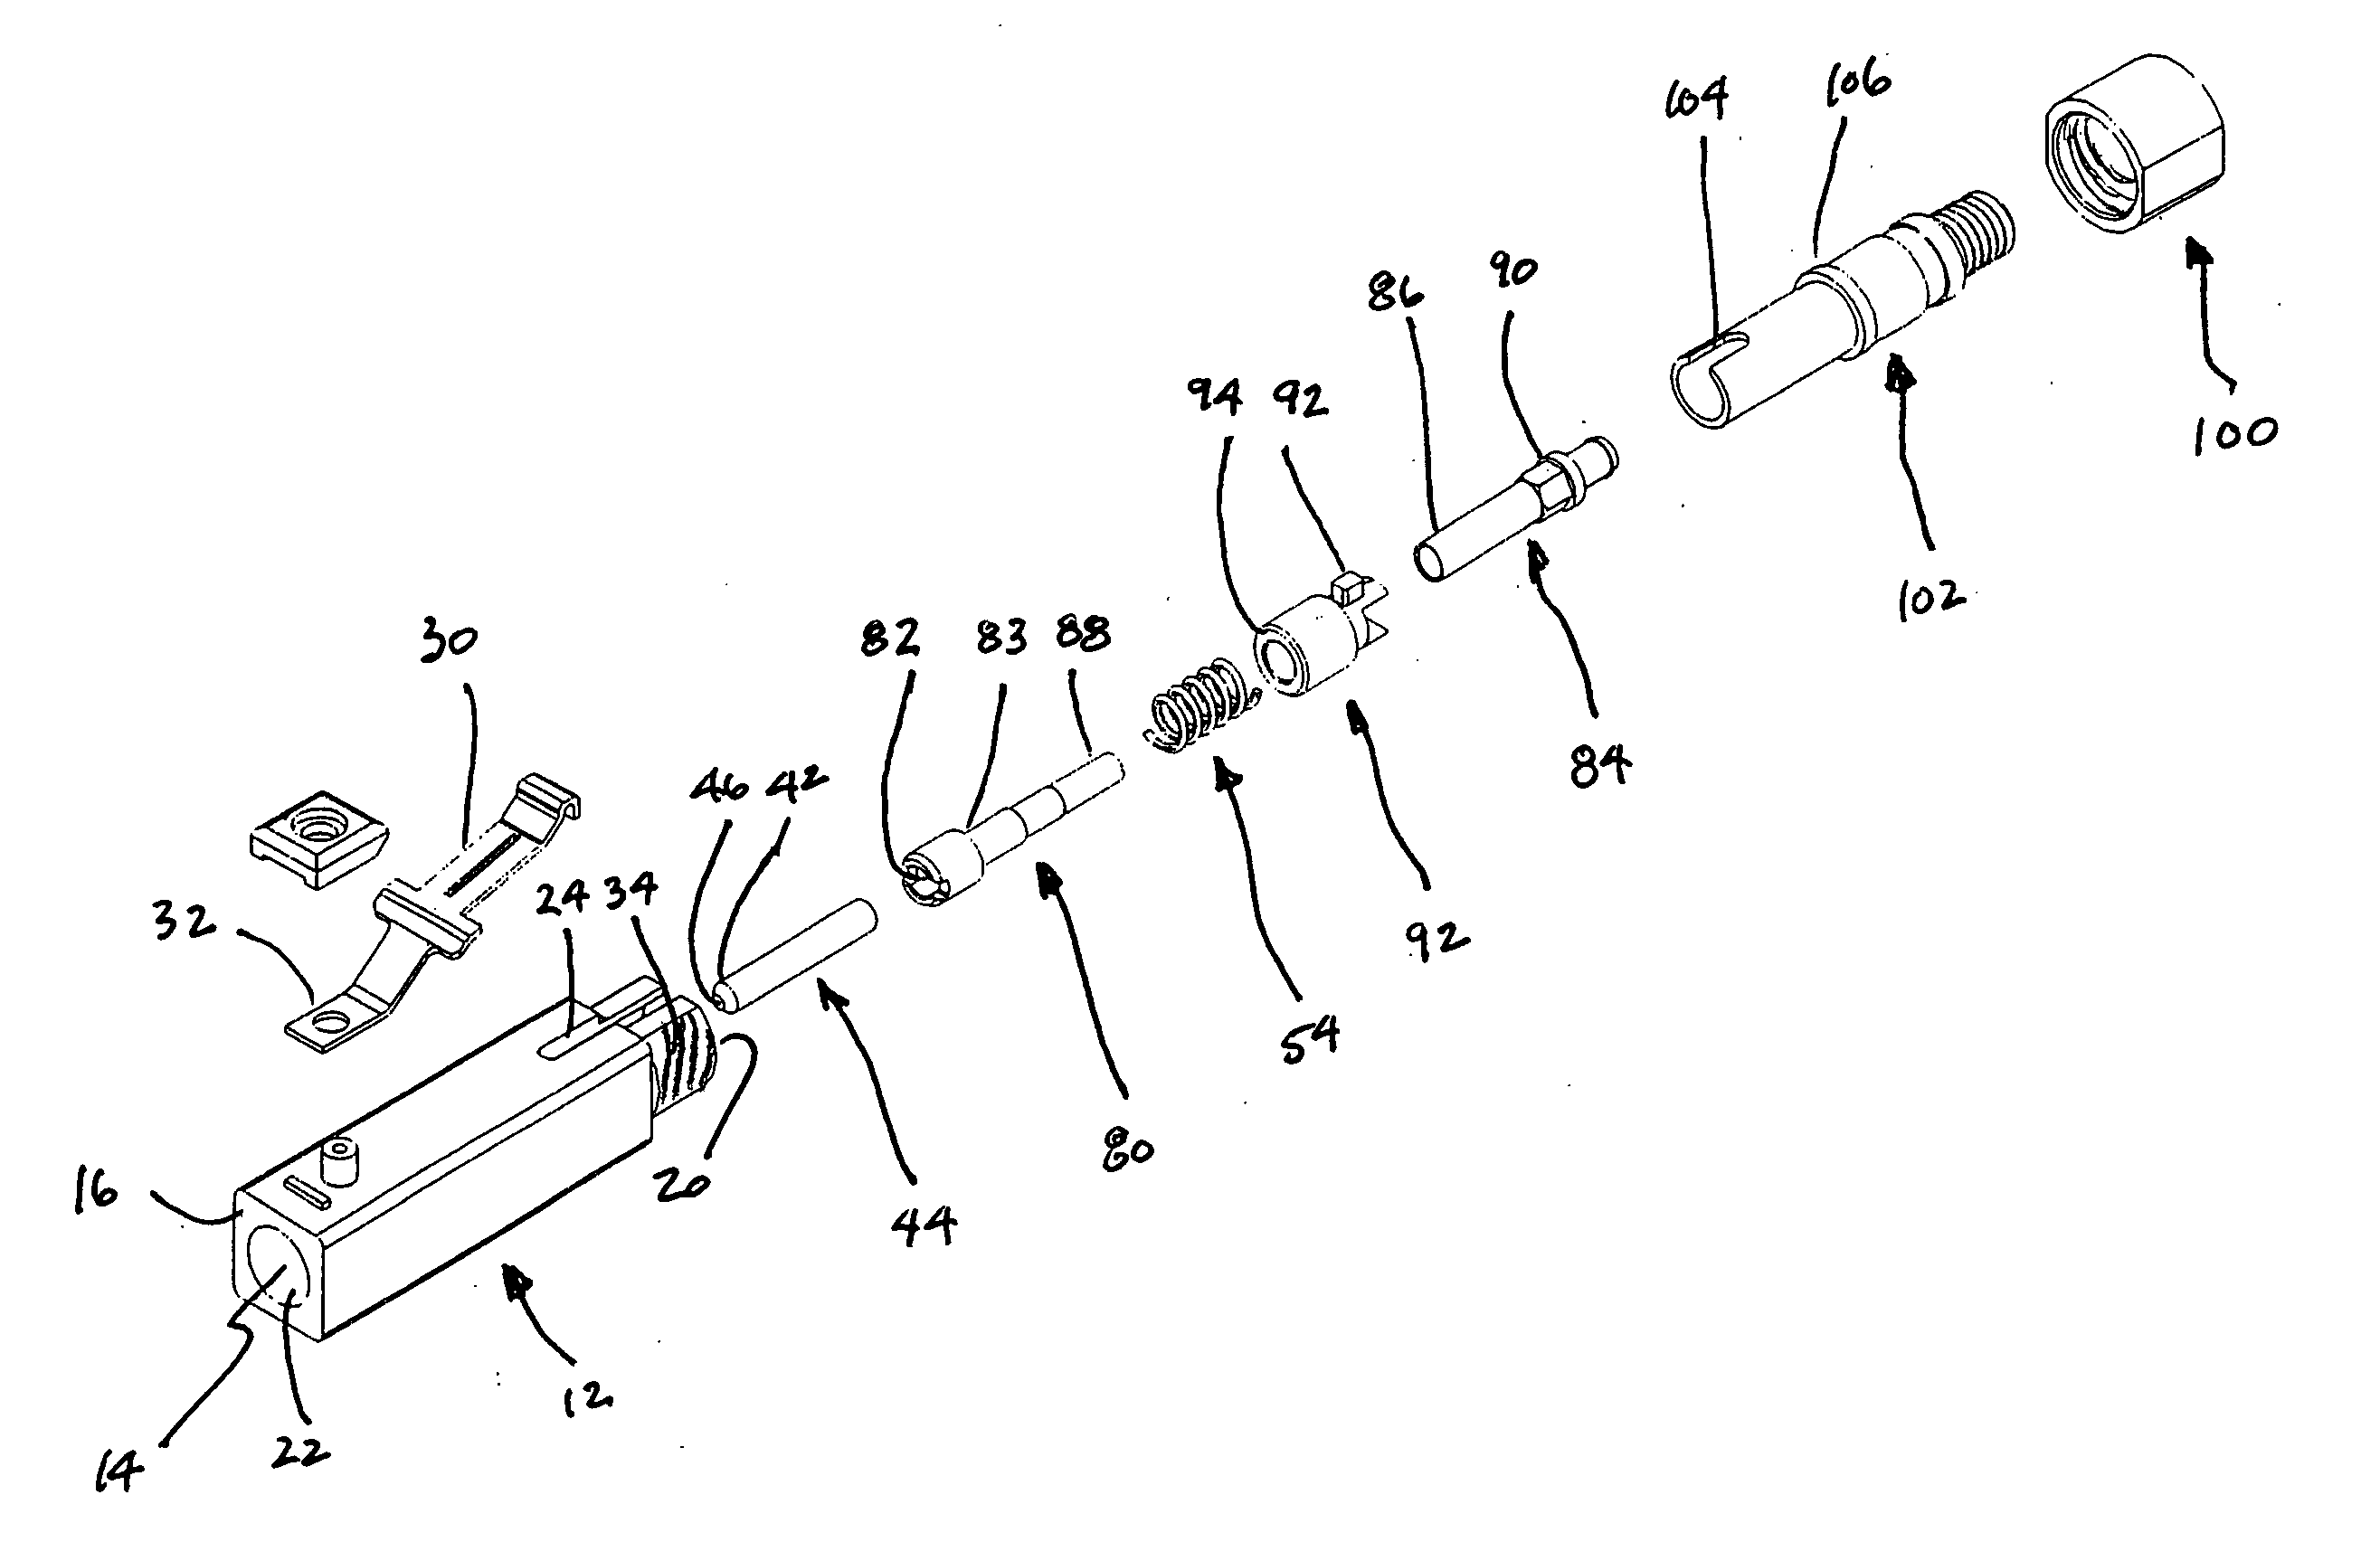 Indexed optical fiber connector